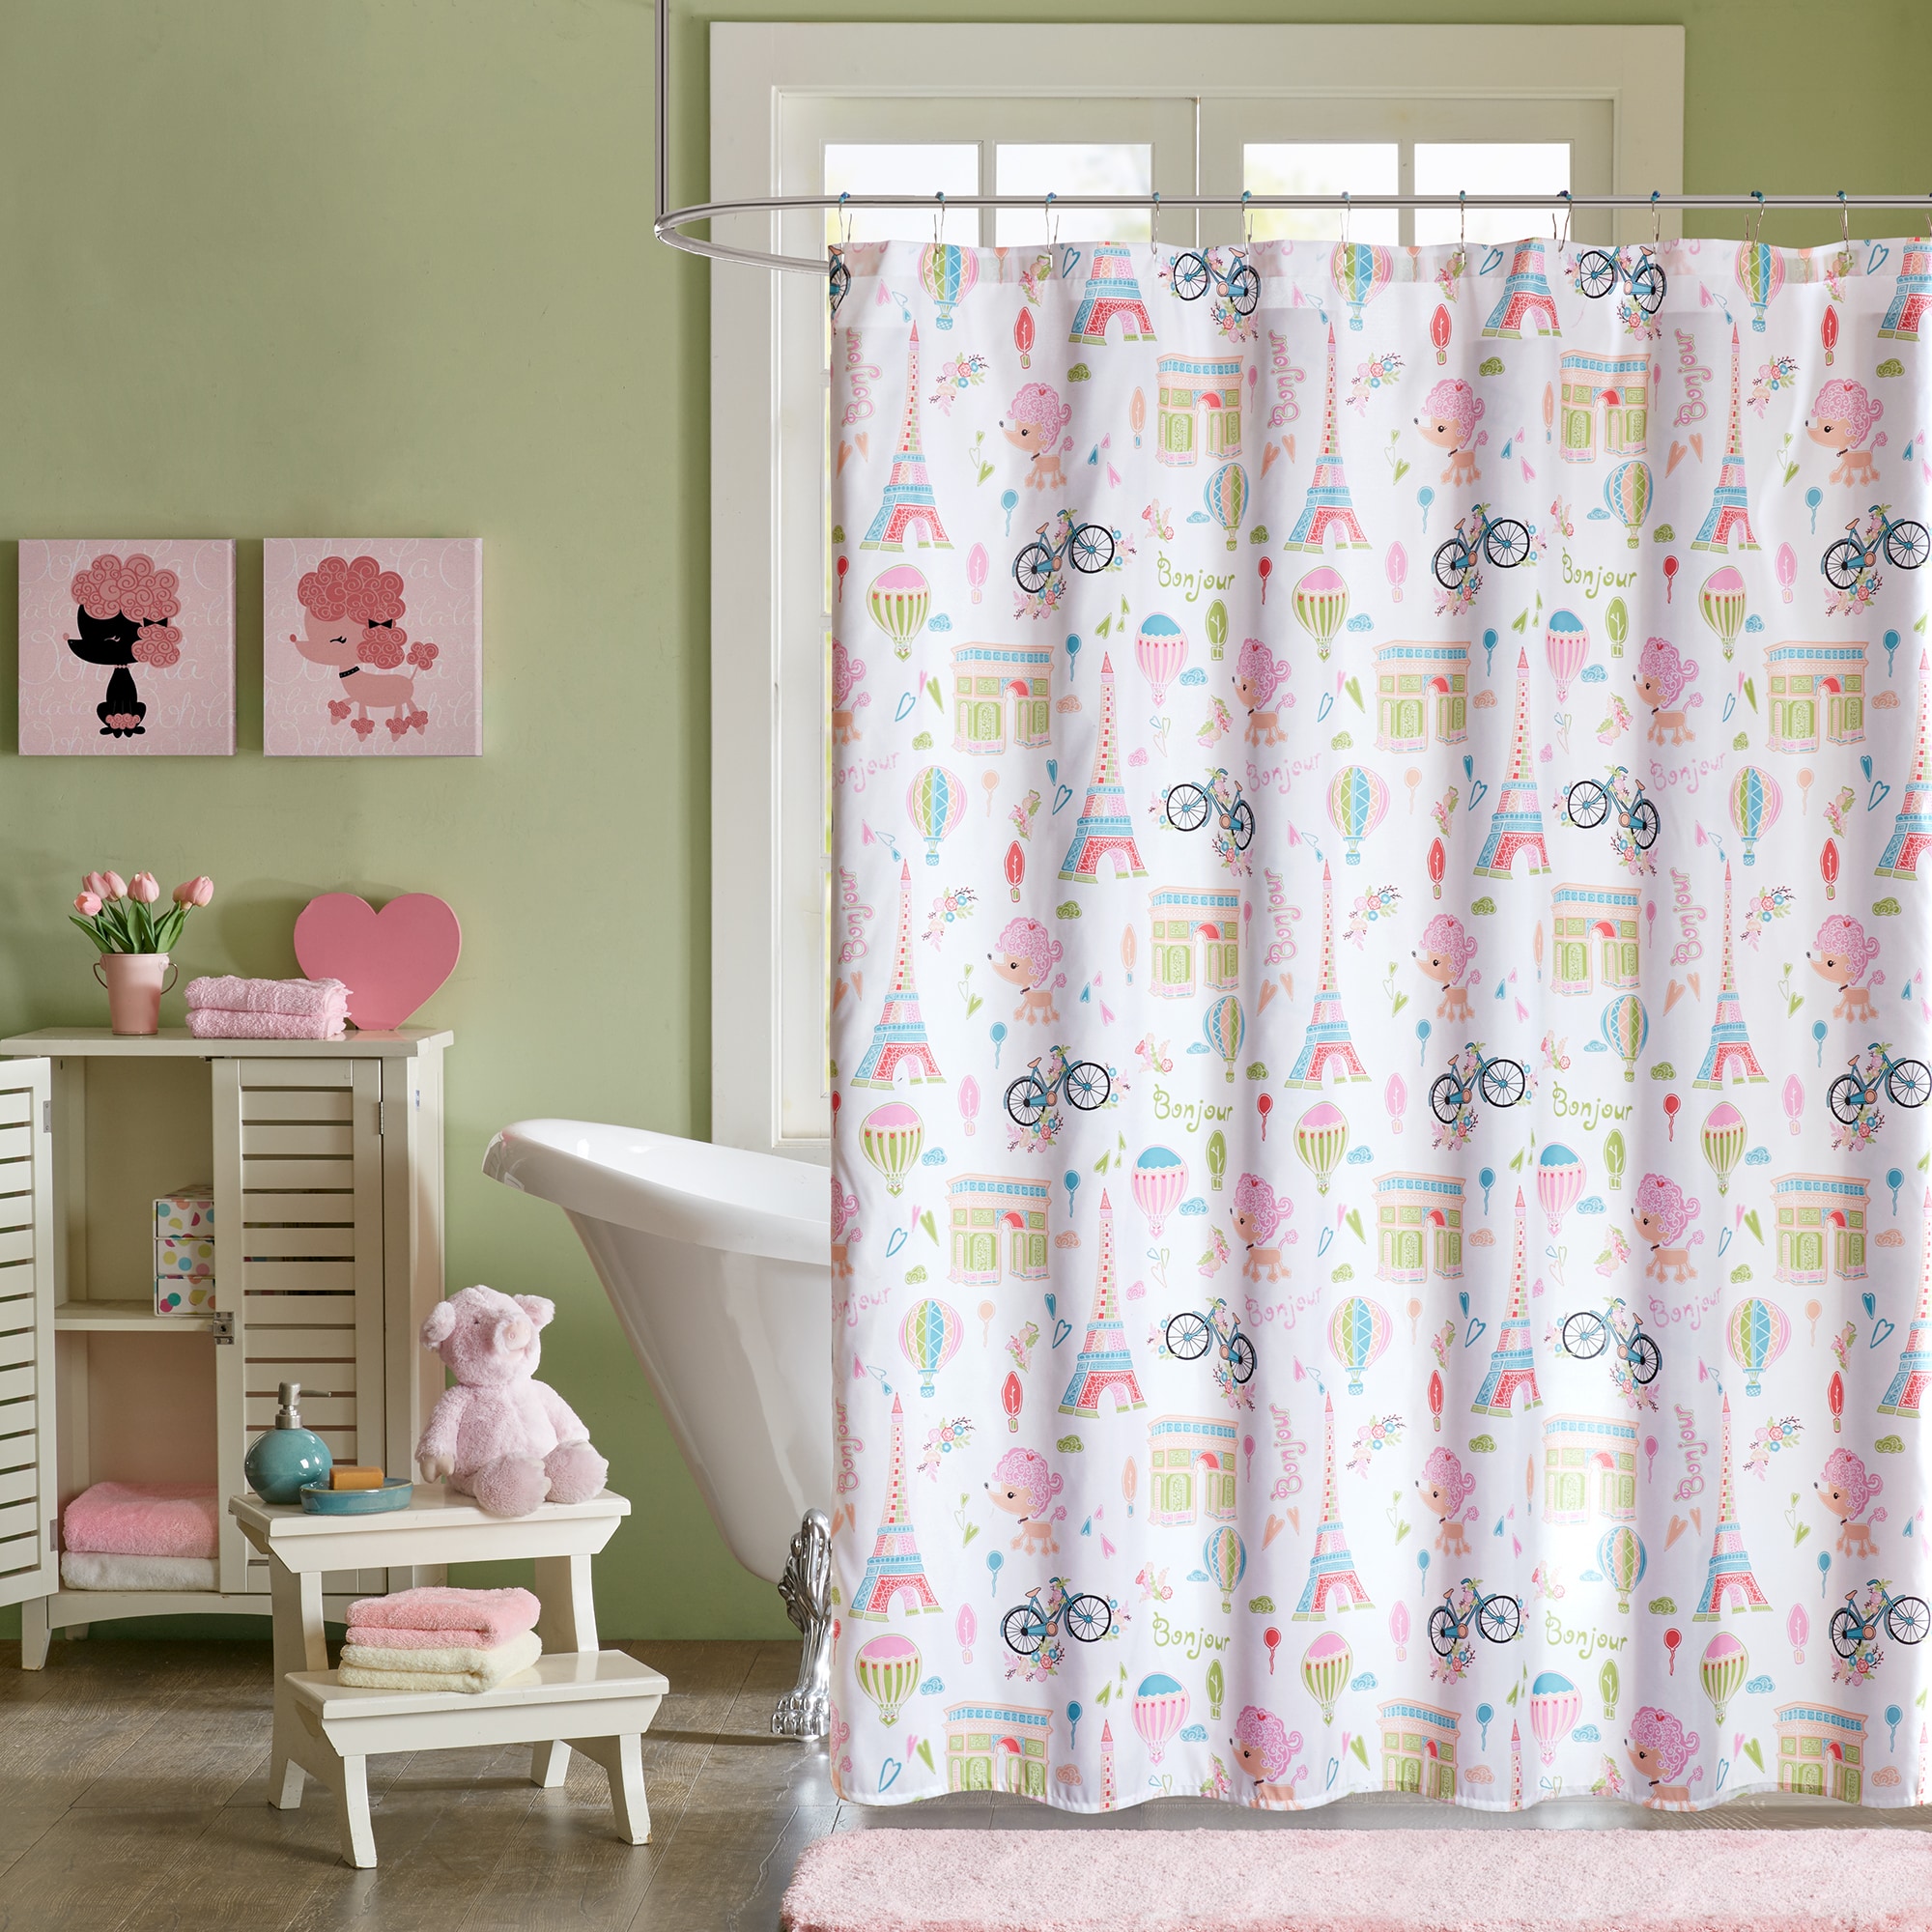 penelope shower curtain